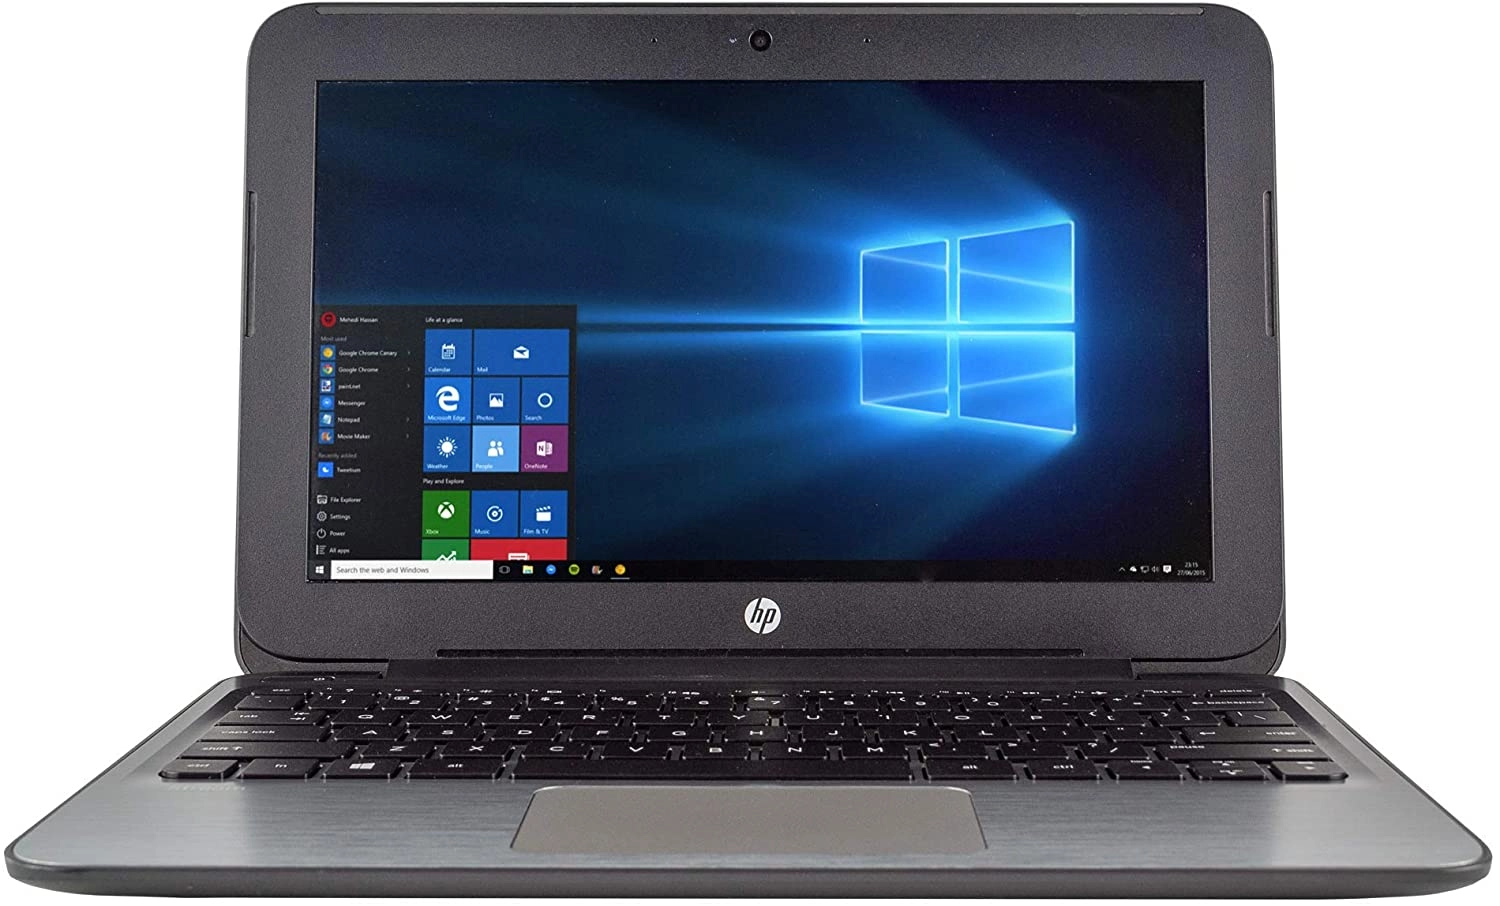 HP Stream 11 Pro G2 laptop image